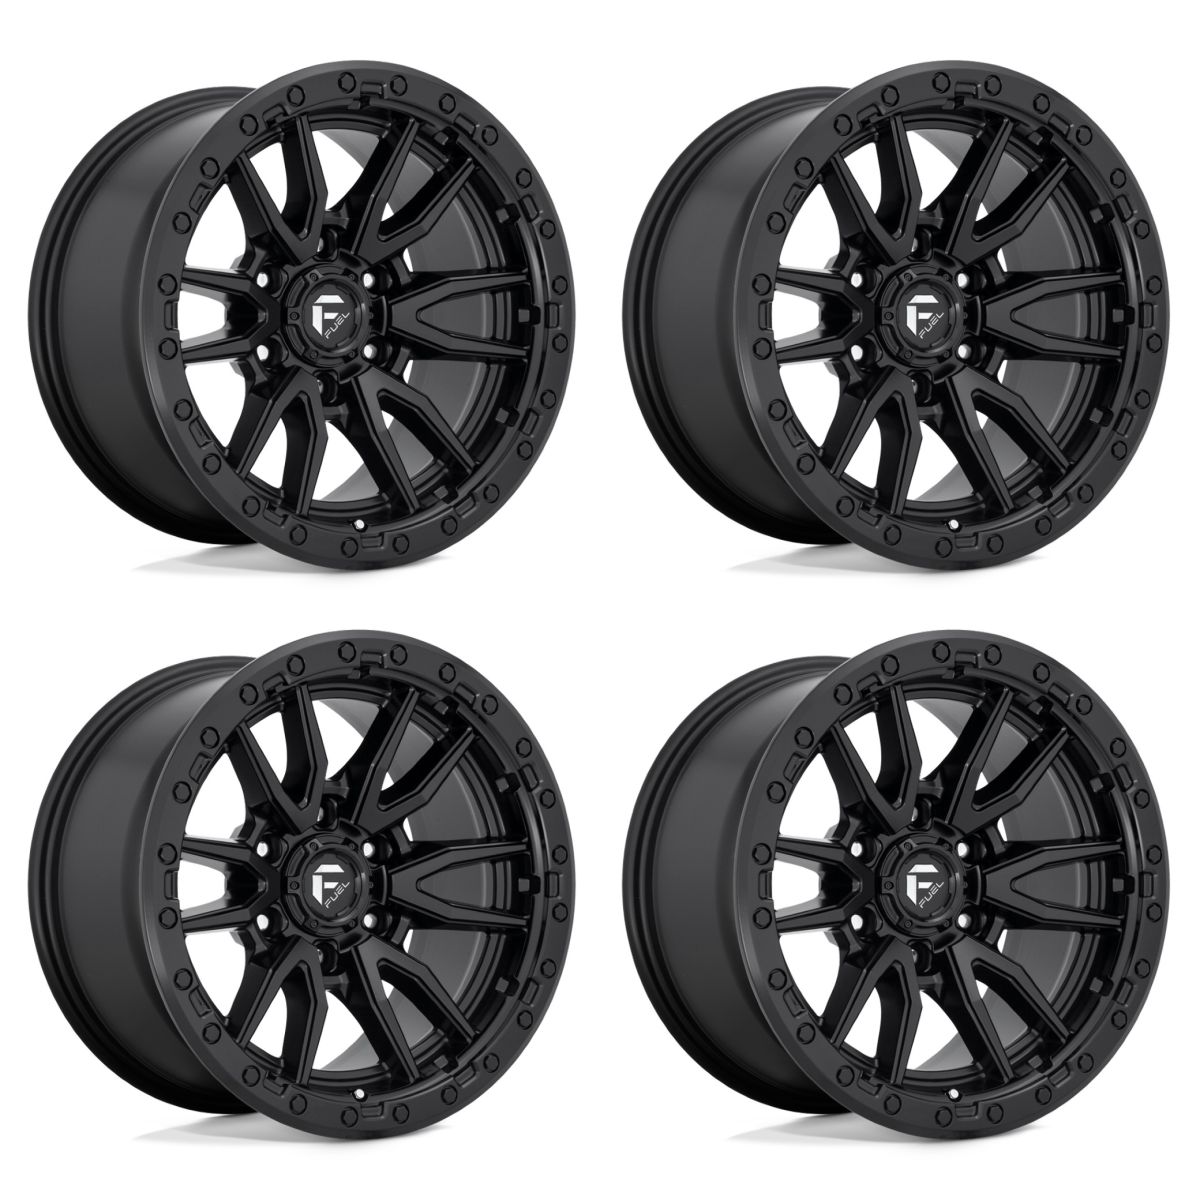 Fuel Off-Road Wheels - (4) 22x12 Fuel Rebel Matte Black Wheels 6X139.7 -44MM Offset For Ford GM Toyota